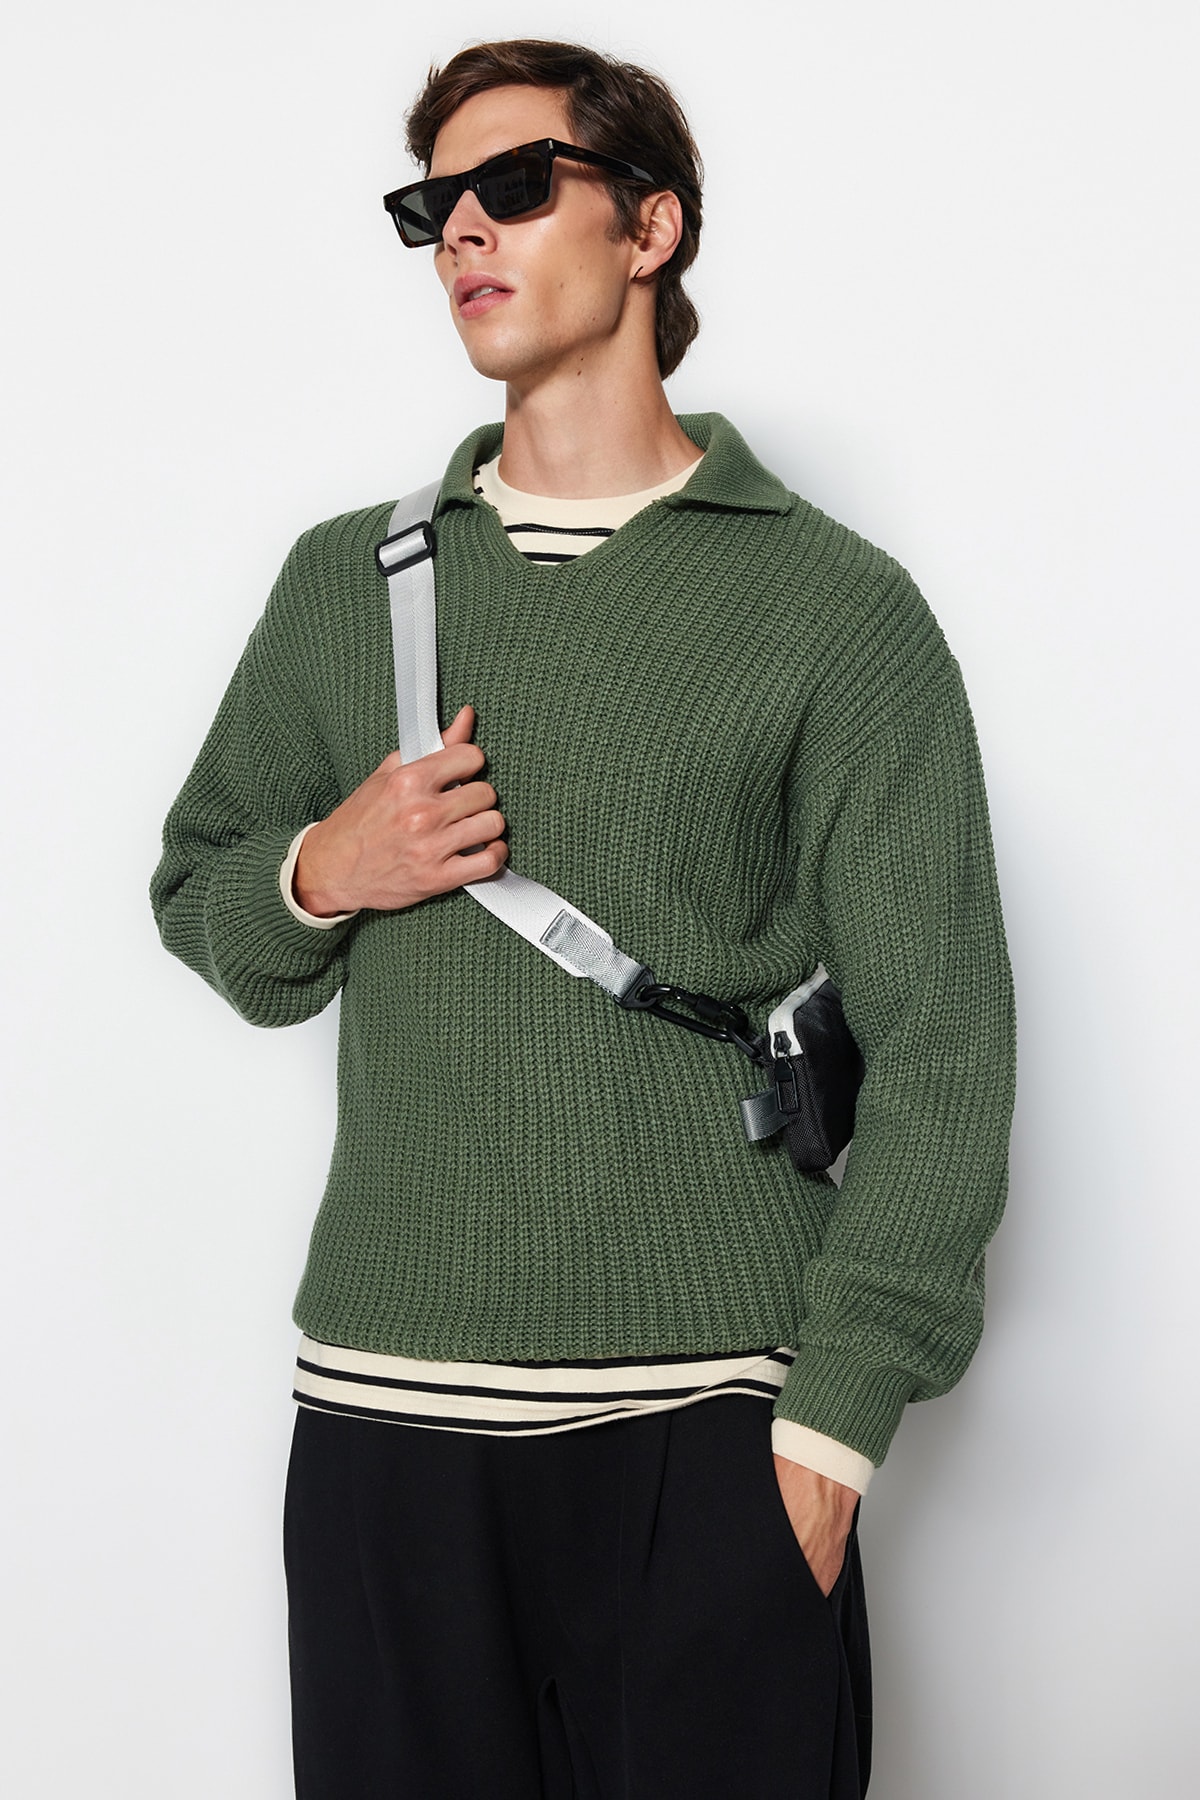 Trendyol Green Unisex Regular Fit Polo Collar Anti-Pilling Knitwear Sweater